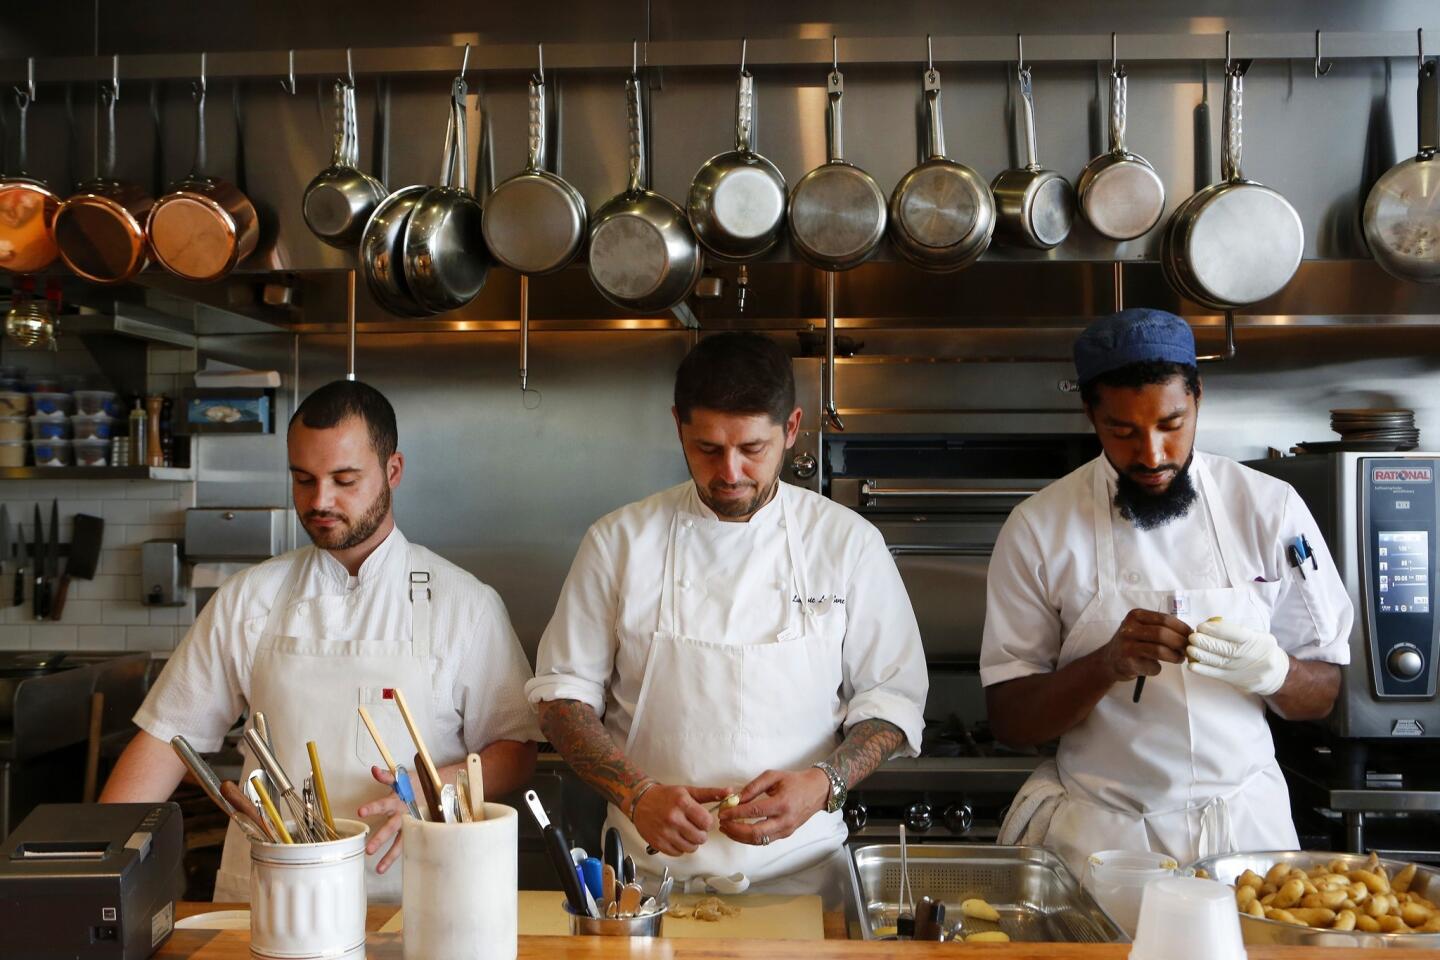 In the kitchen at Trois Mec are, from left, chef de cuisine Douglas Rankin, chef Ludo Lefebvre, and line cook Brandon Gray.